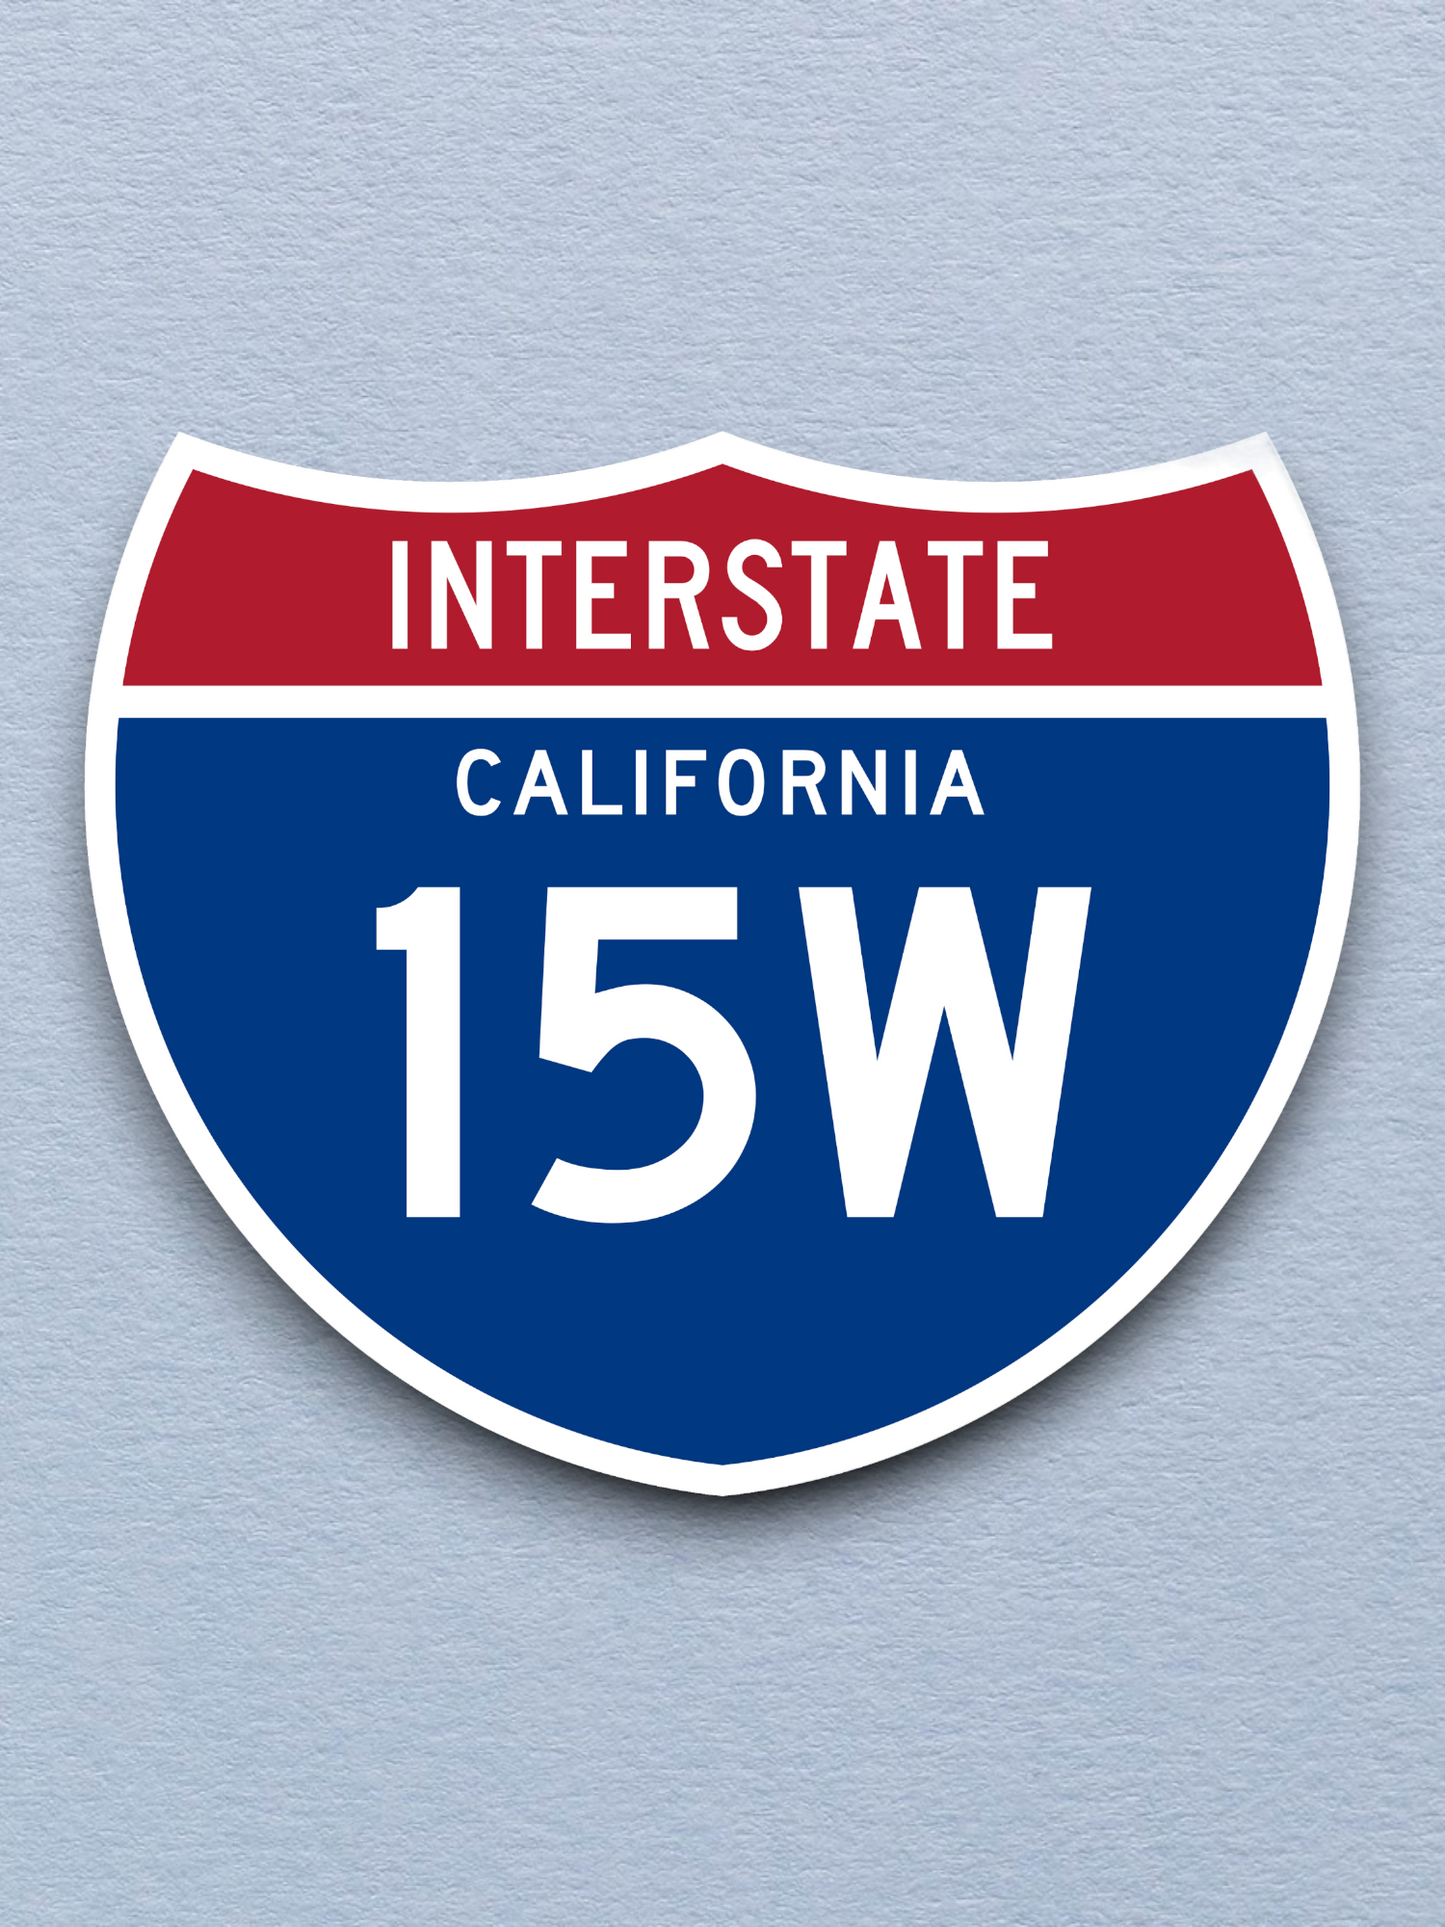 Interstate I-15W - California - Road Sign Sticker